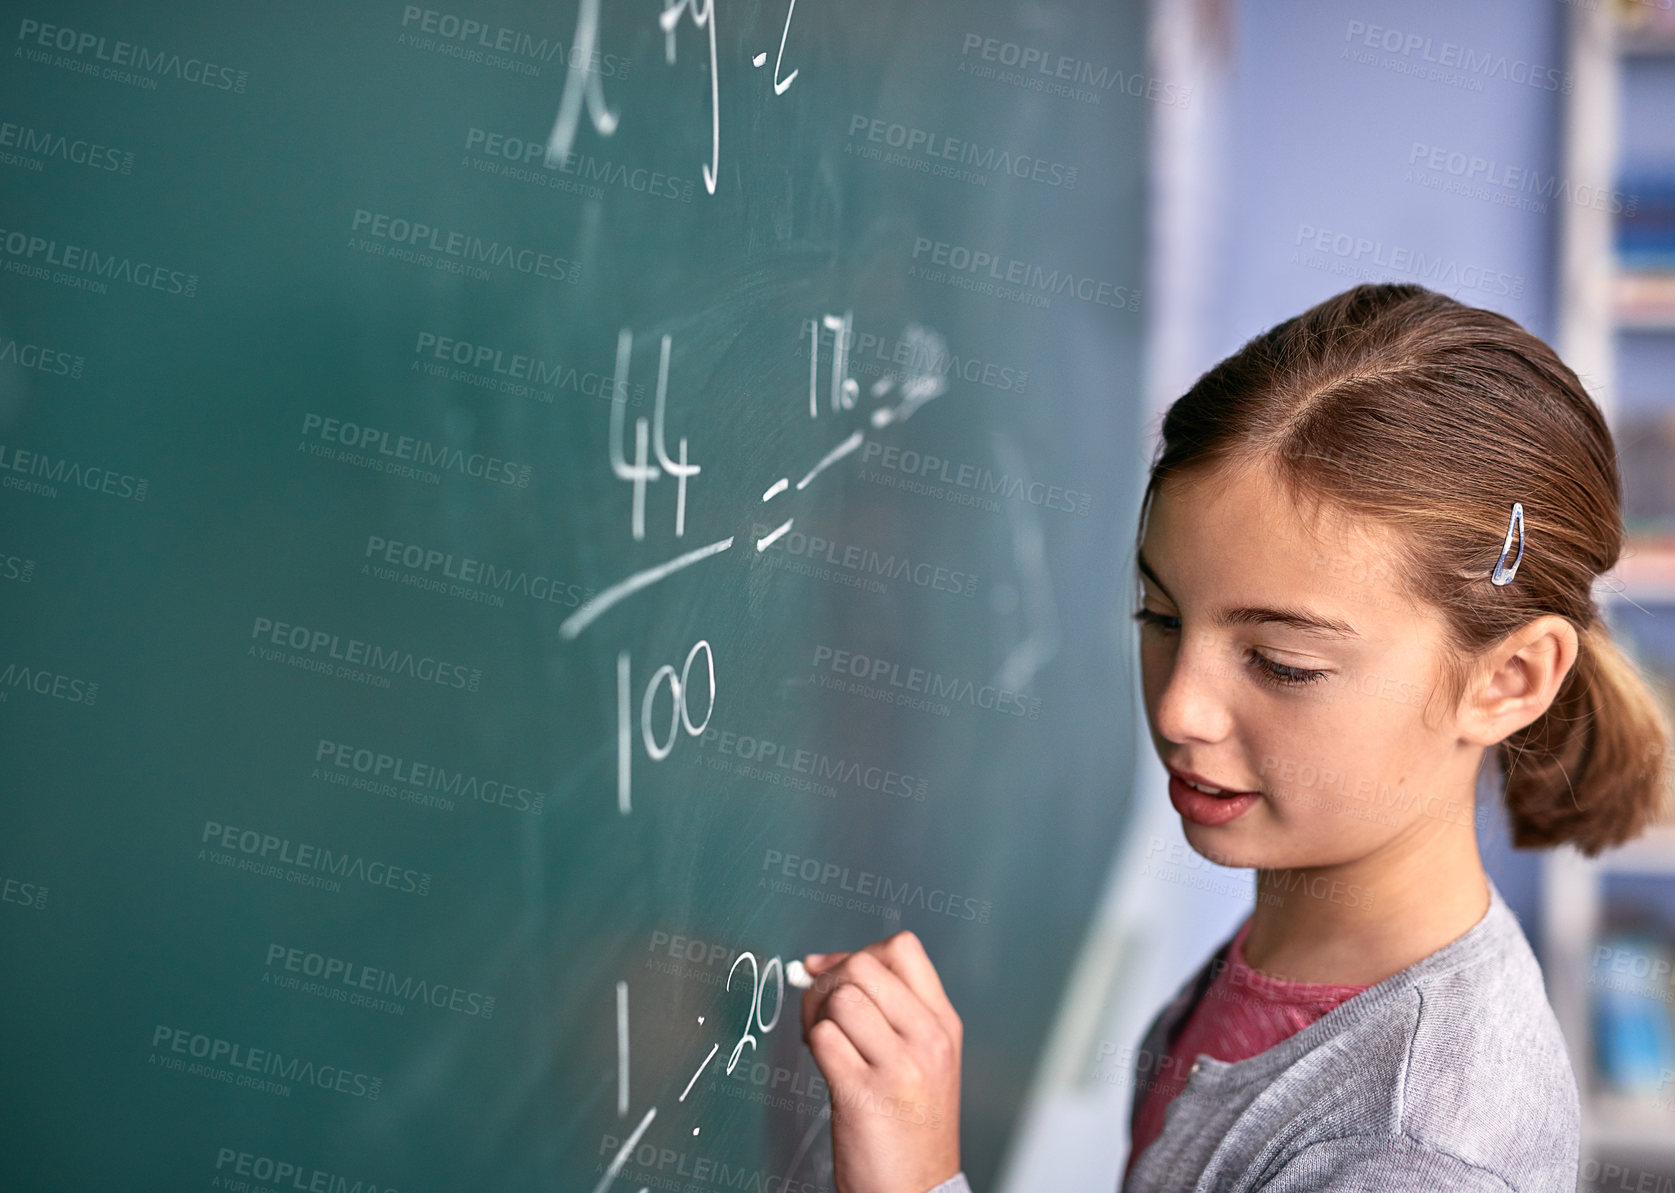 Buy stock photo Cropped shot of an elementary school girl writing on a blackboard in class